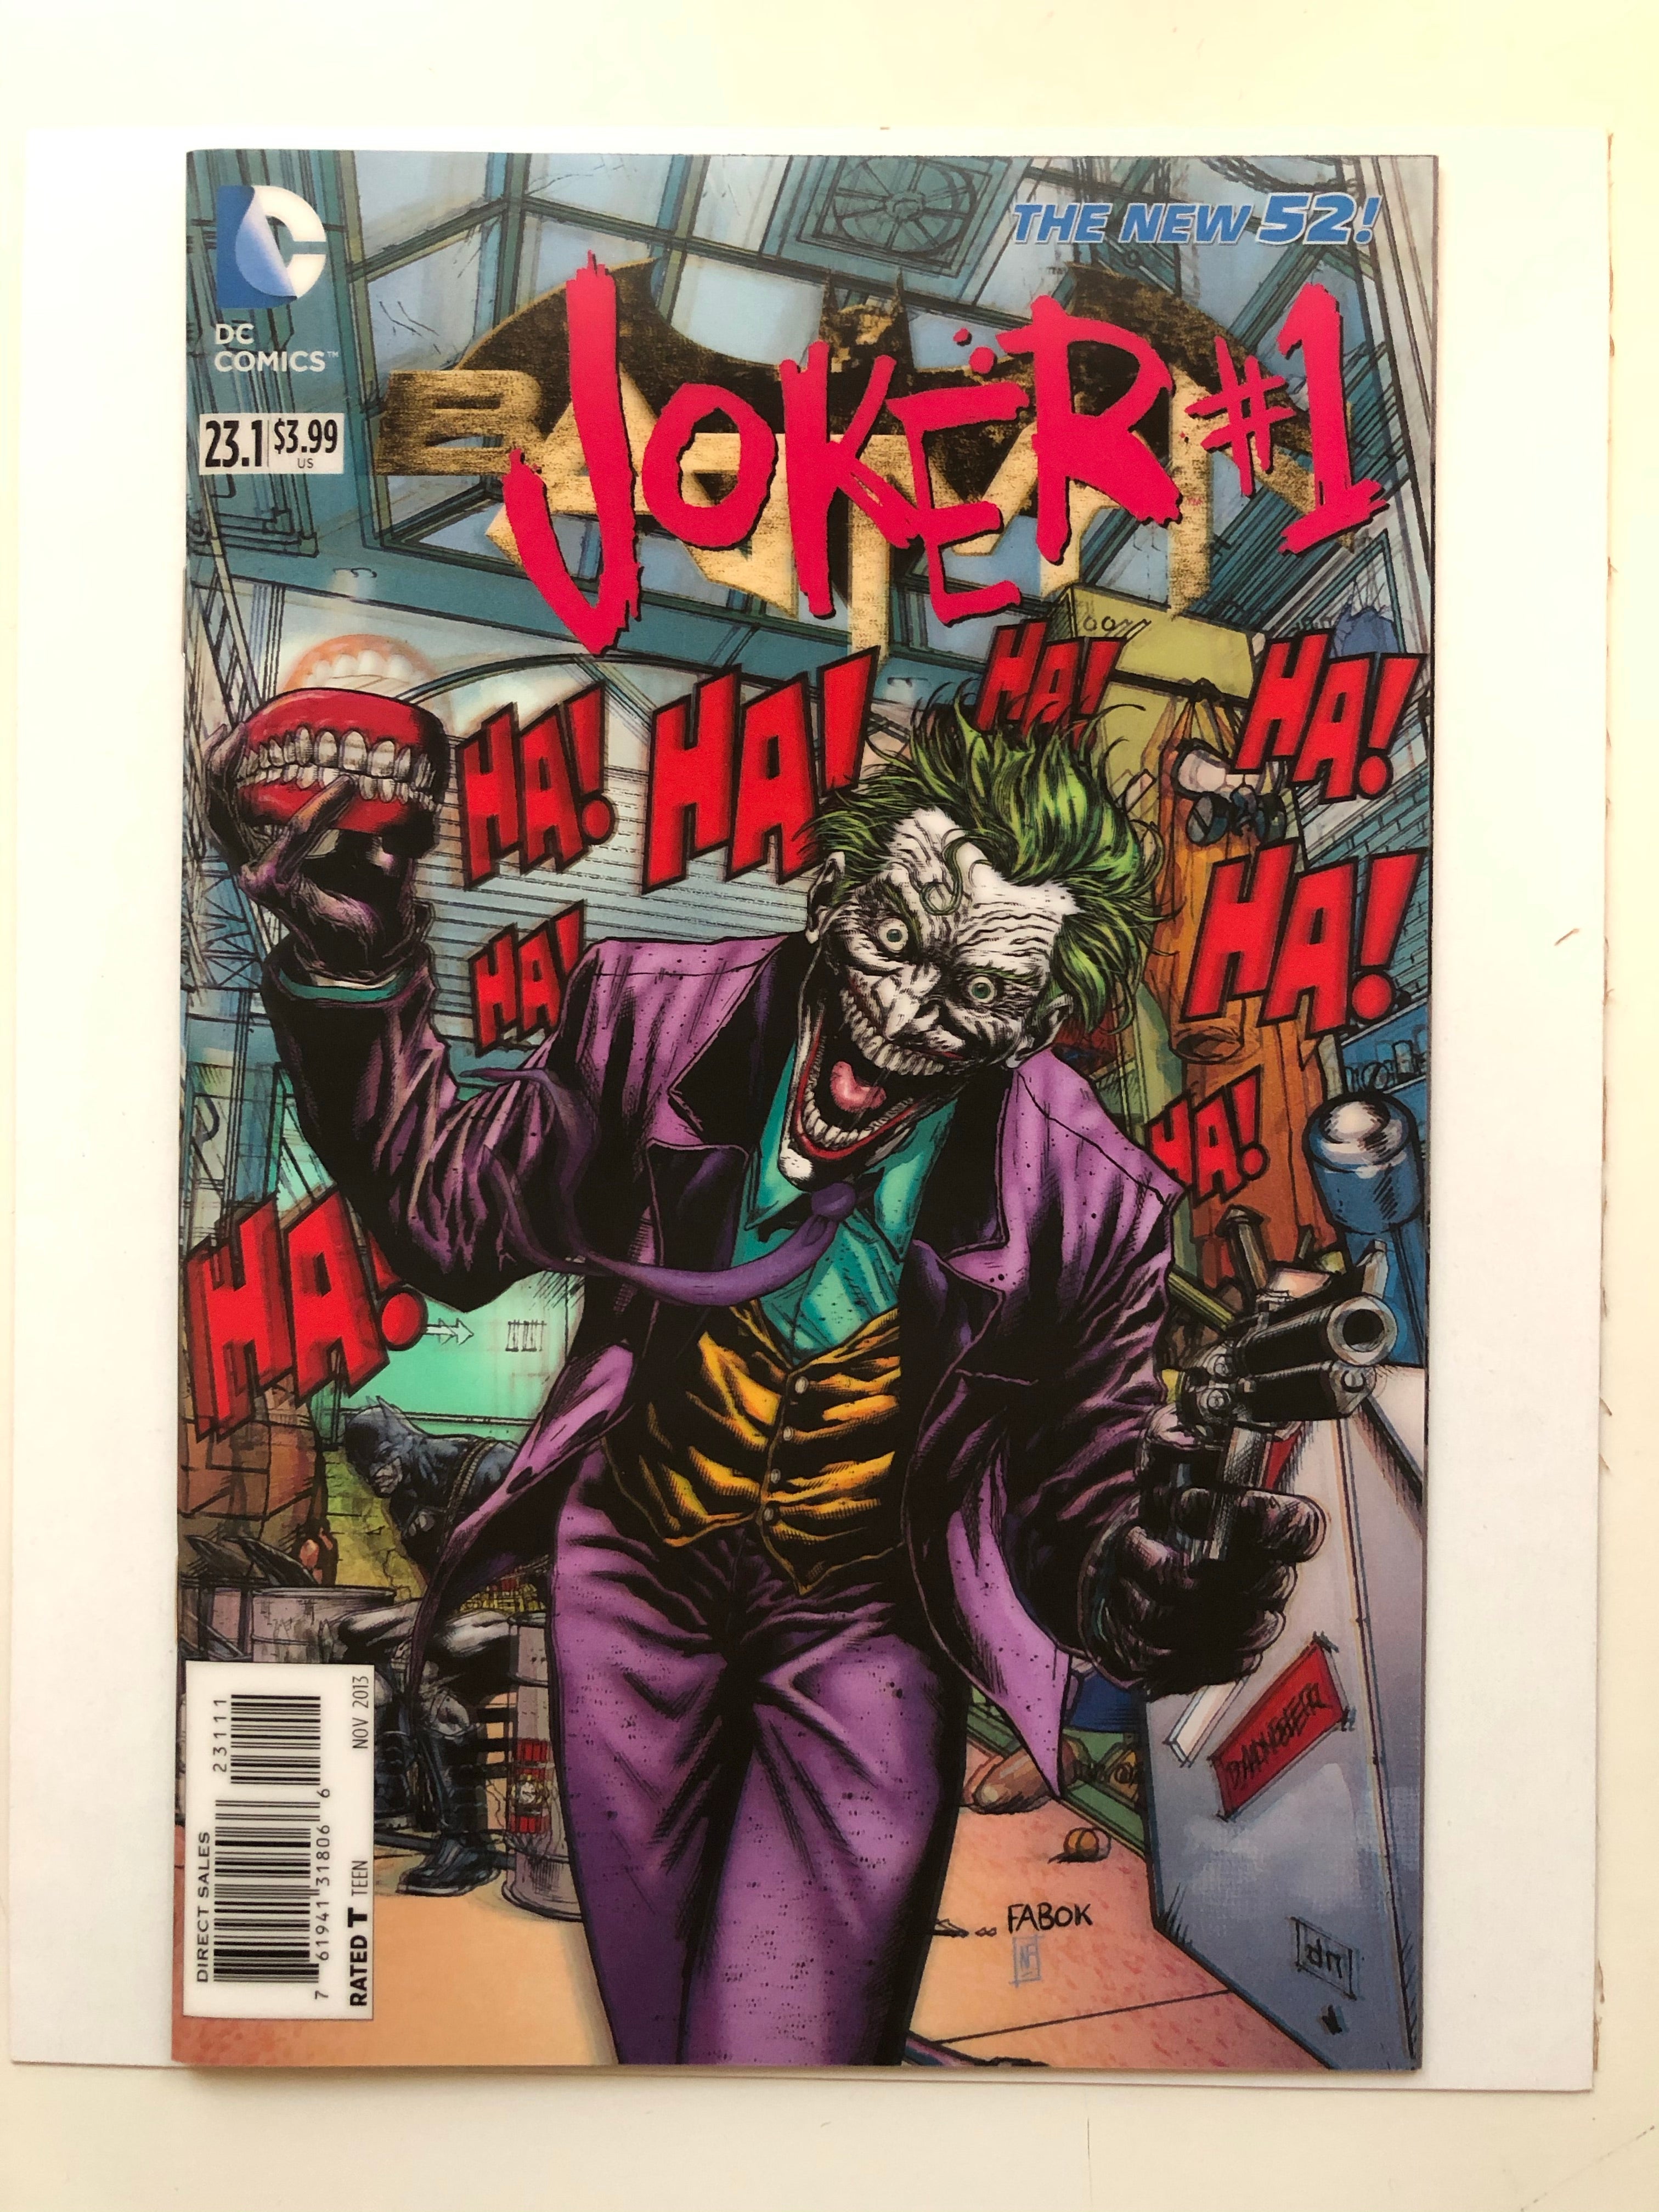 The Joker batman 3D comic cover comic book